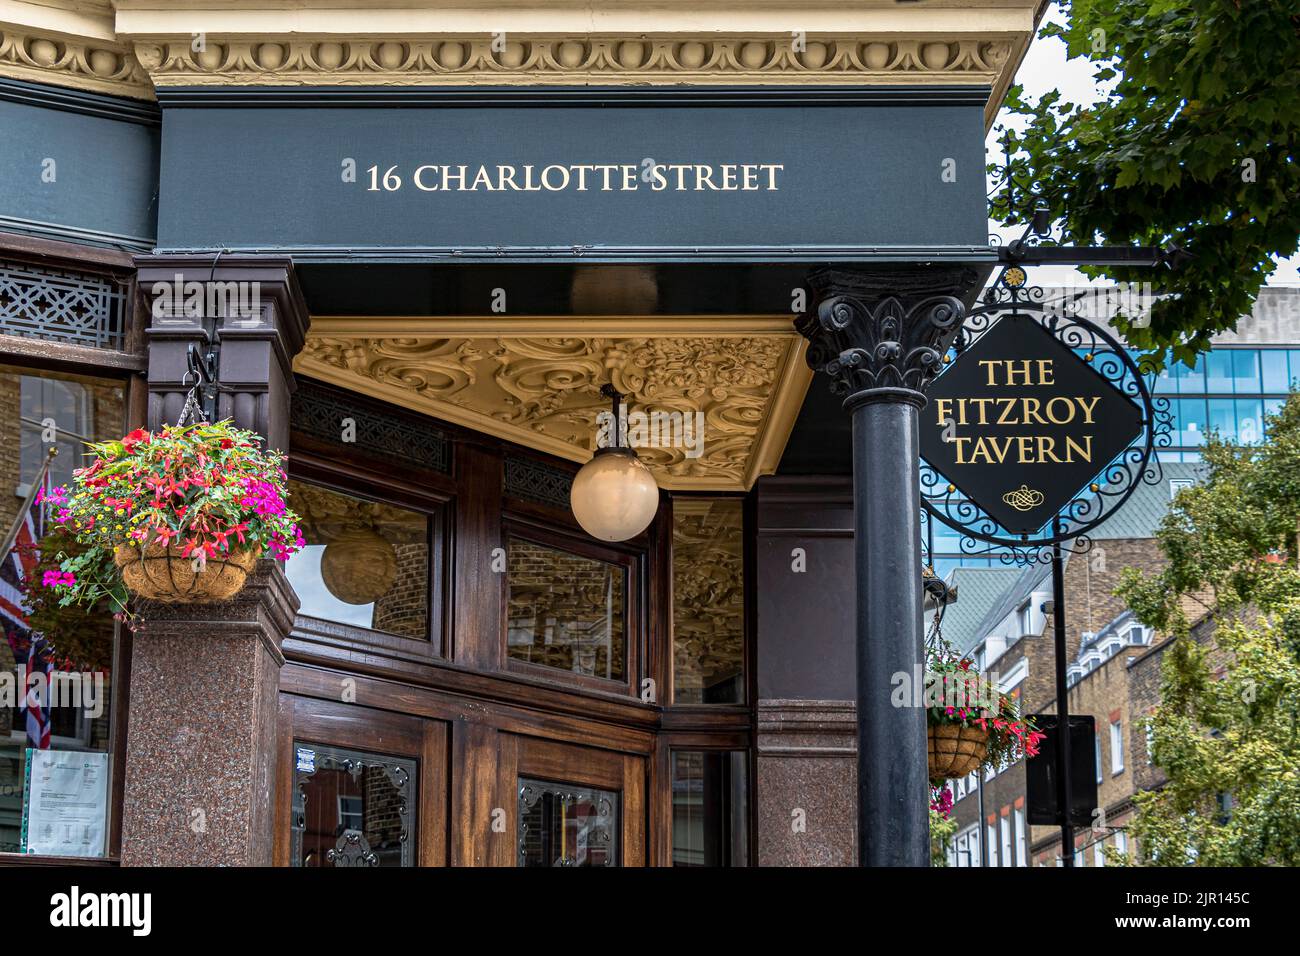 Fitzroy Tavern on Charlotte Street, Fitzrovia, London W1 Stock Photo